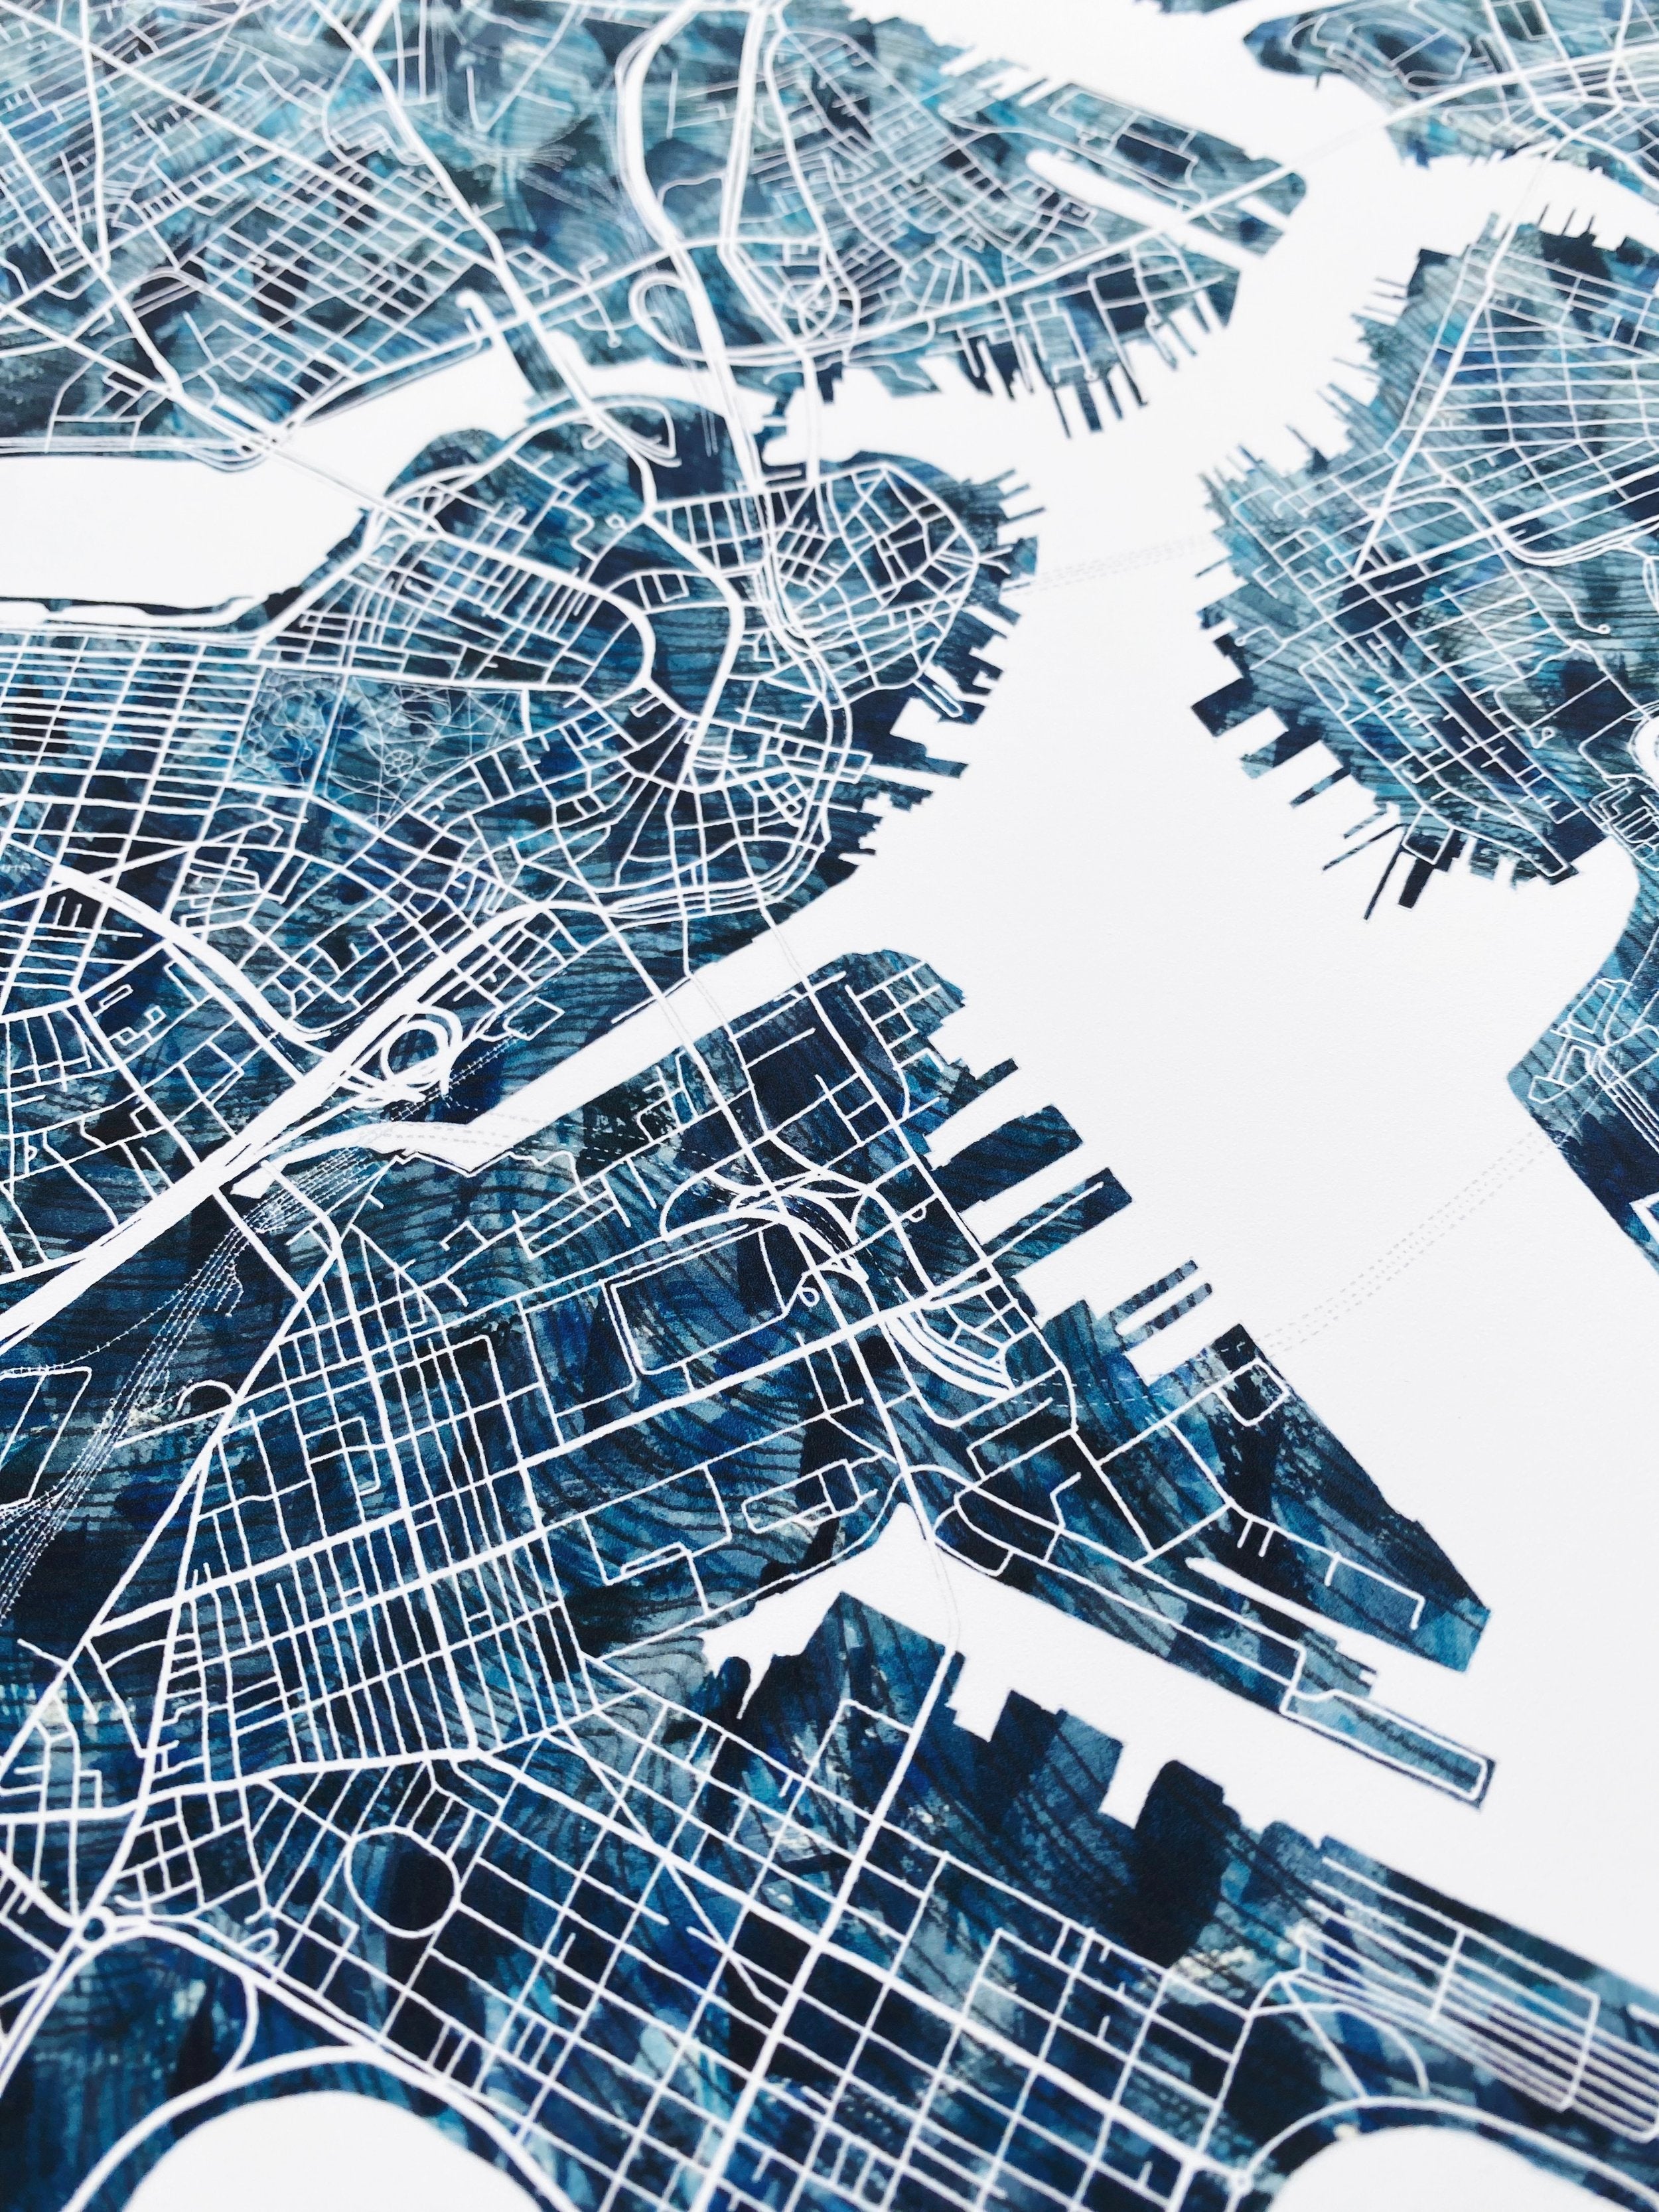 Greater BOSTON Urban Fabrics City Map: PRINT